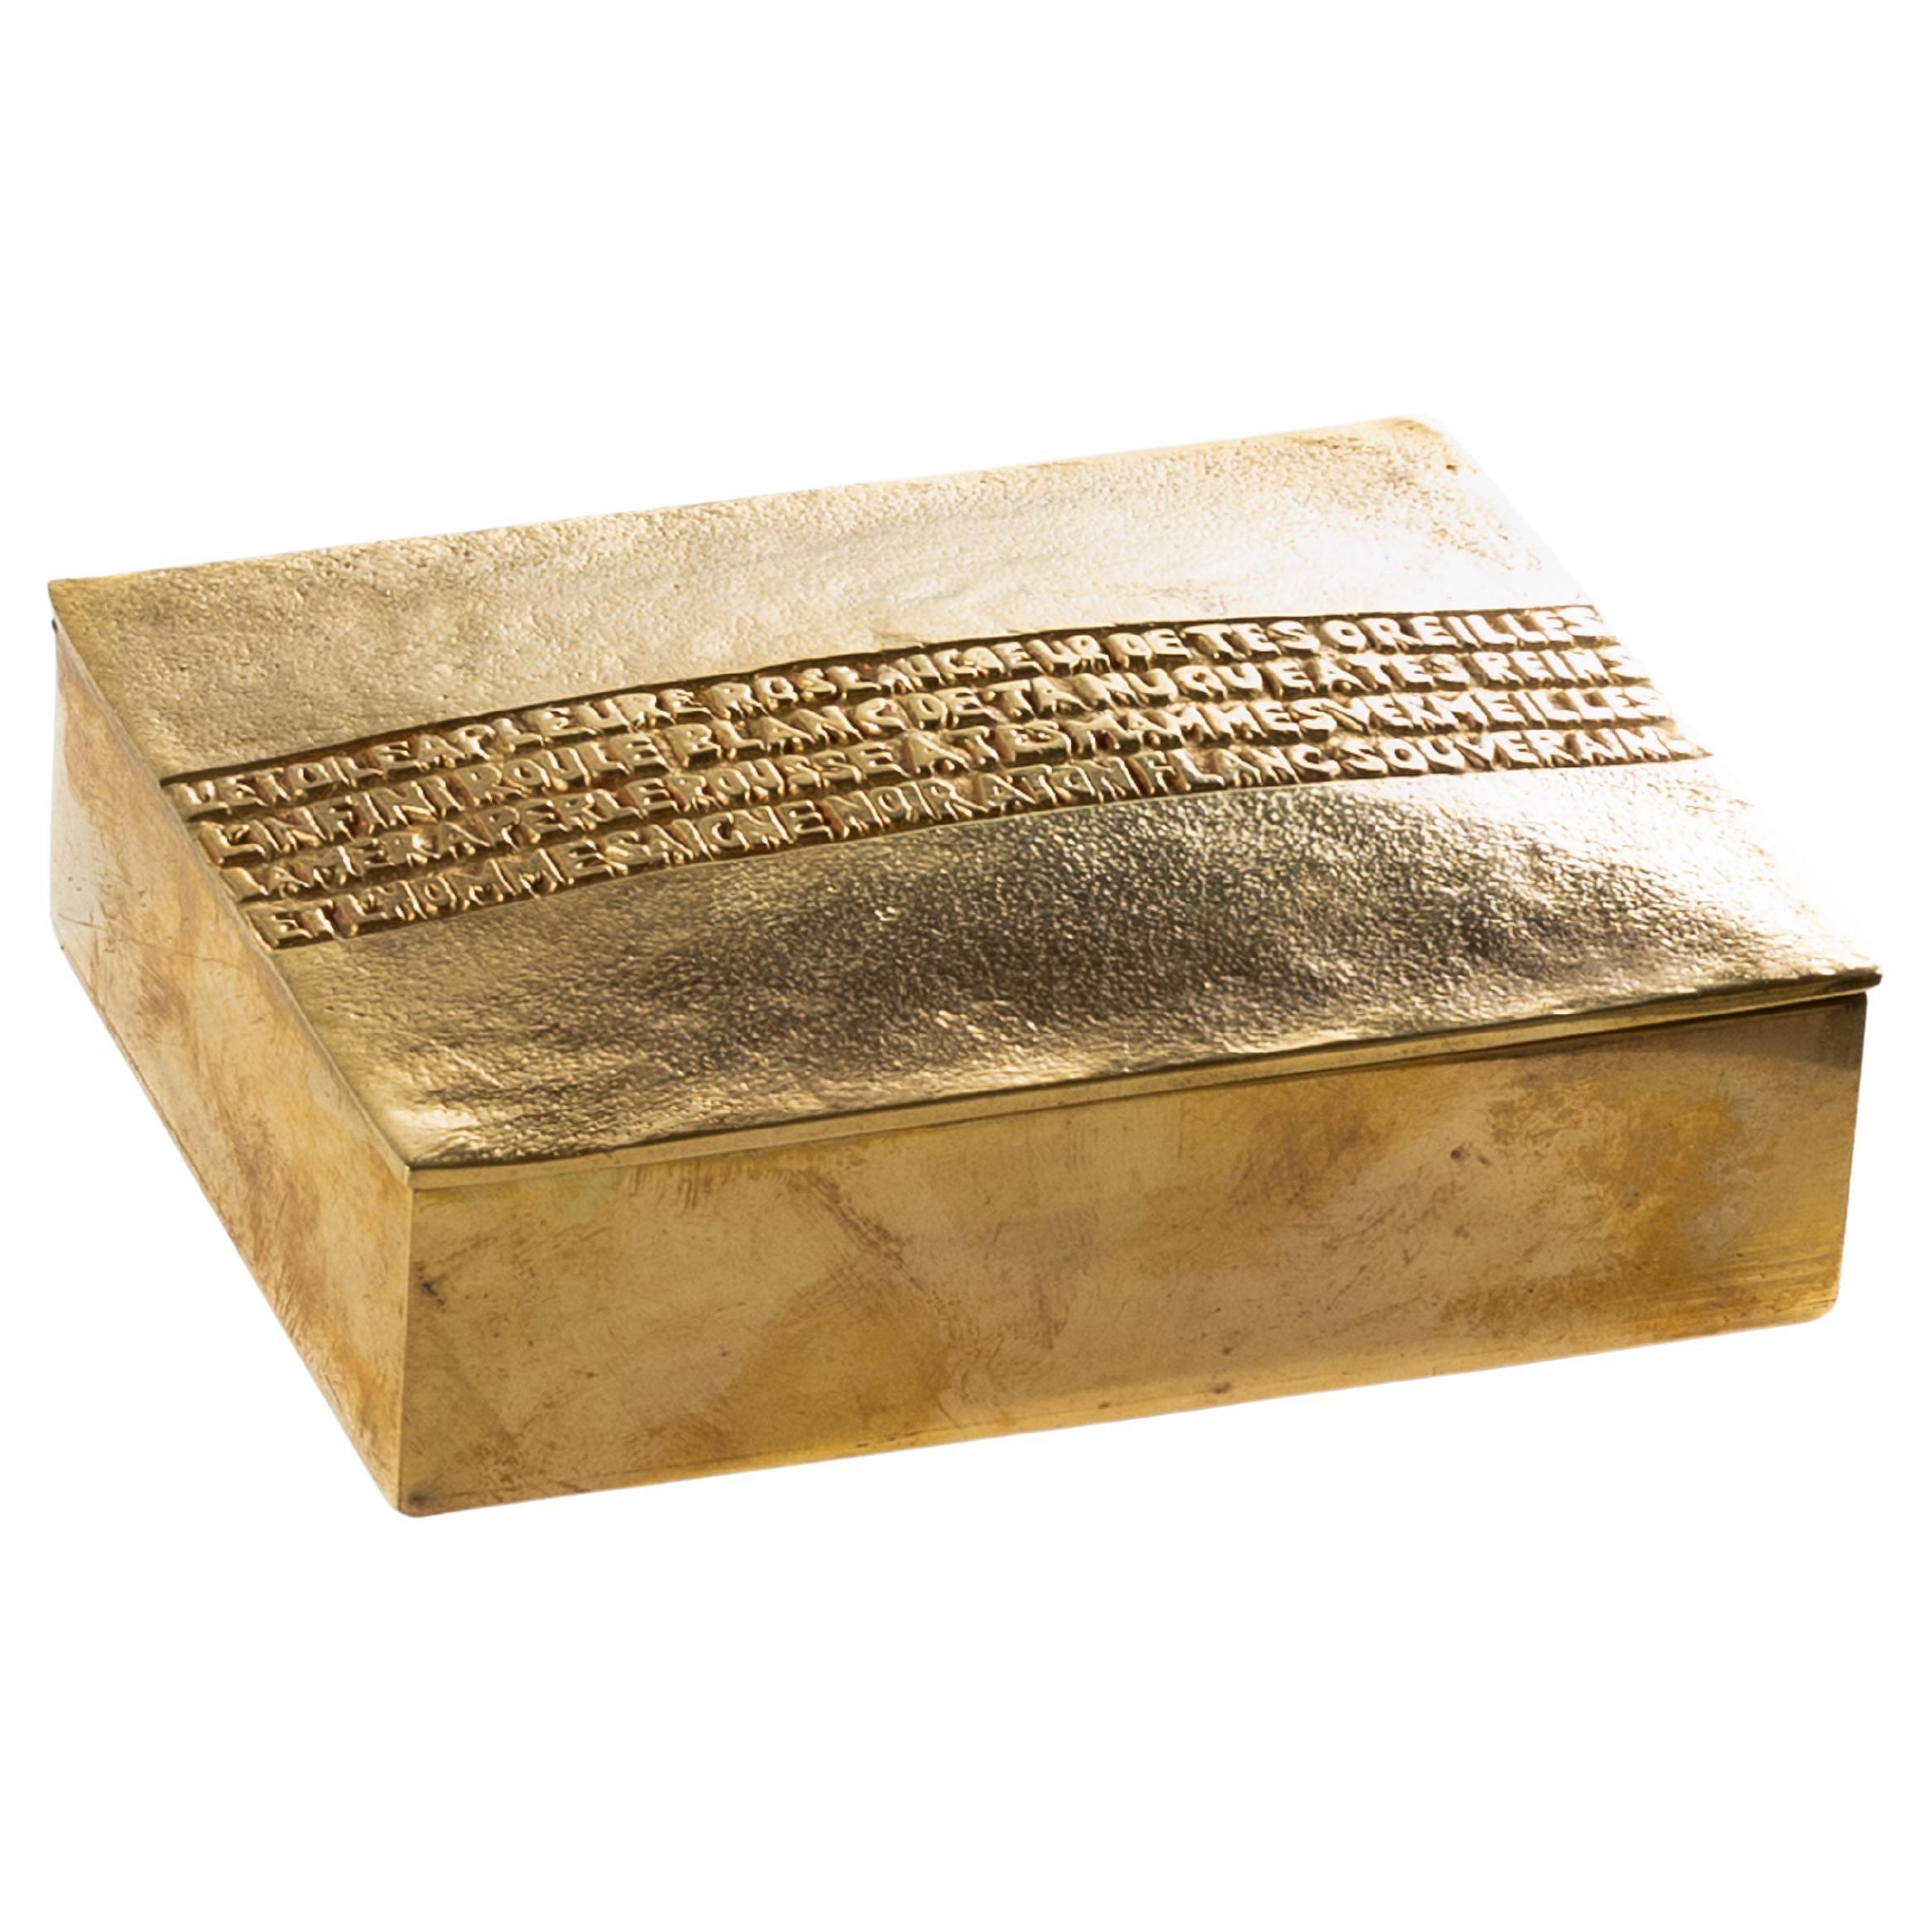 L'étoile a pleuré rose de Line Vautrin - Rara caja de bronce dorado en venta